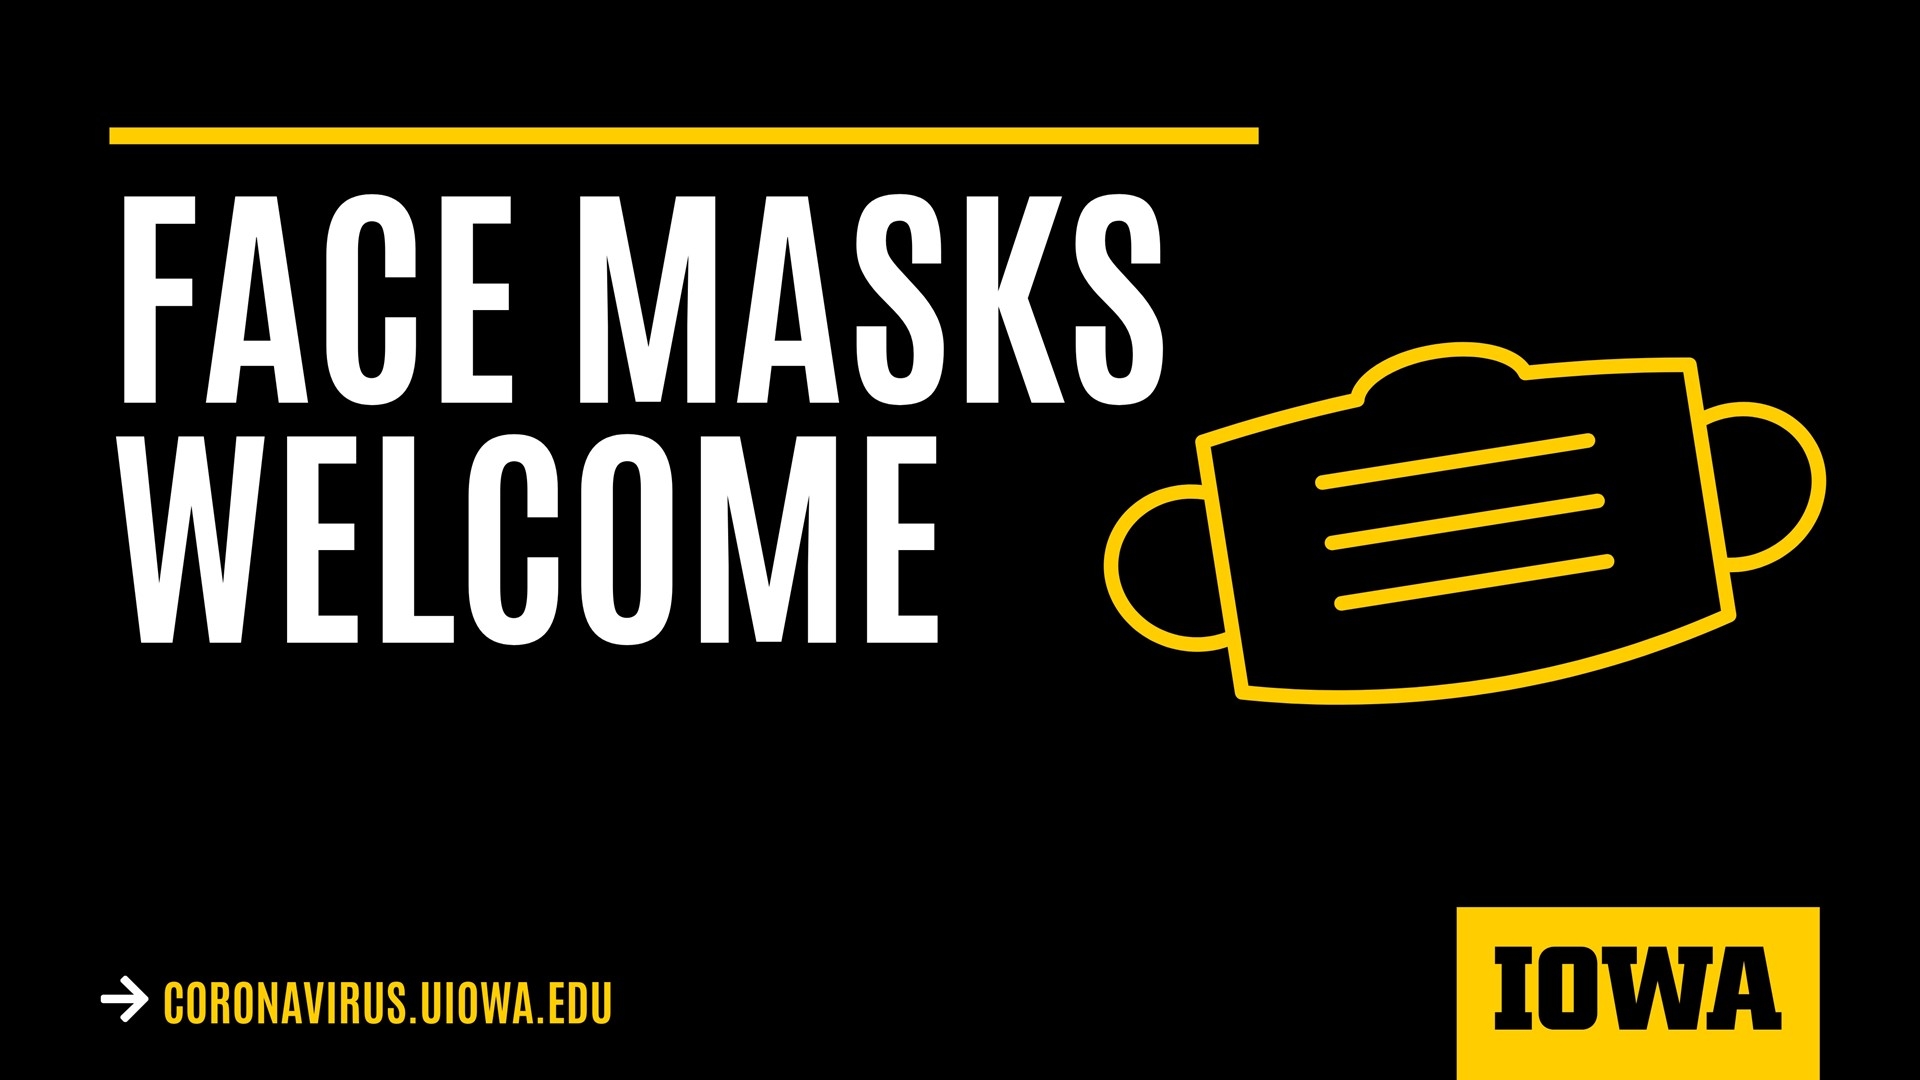 Face masks welcome. coronavirus.uiowa.edu